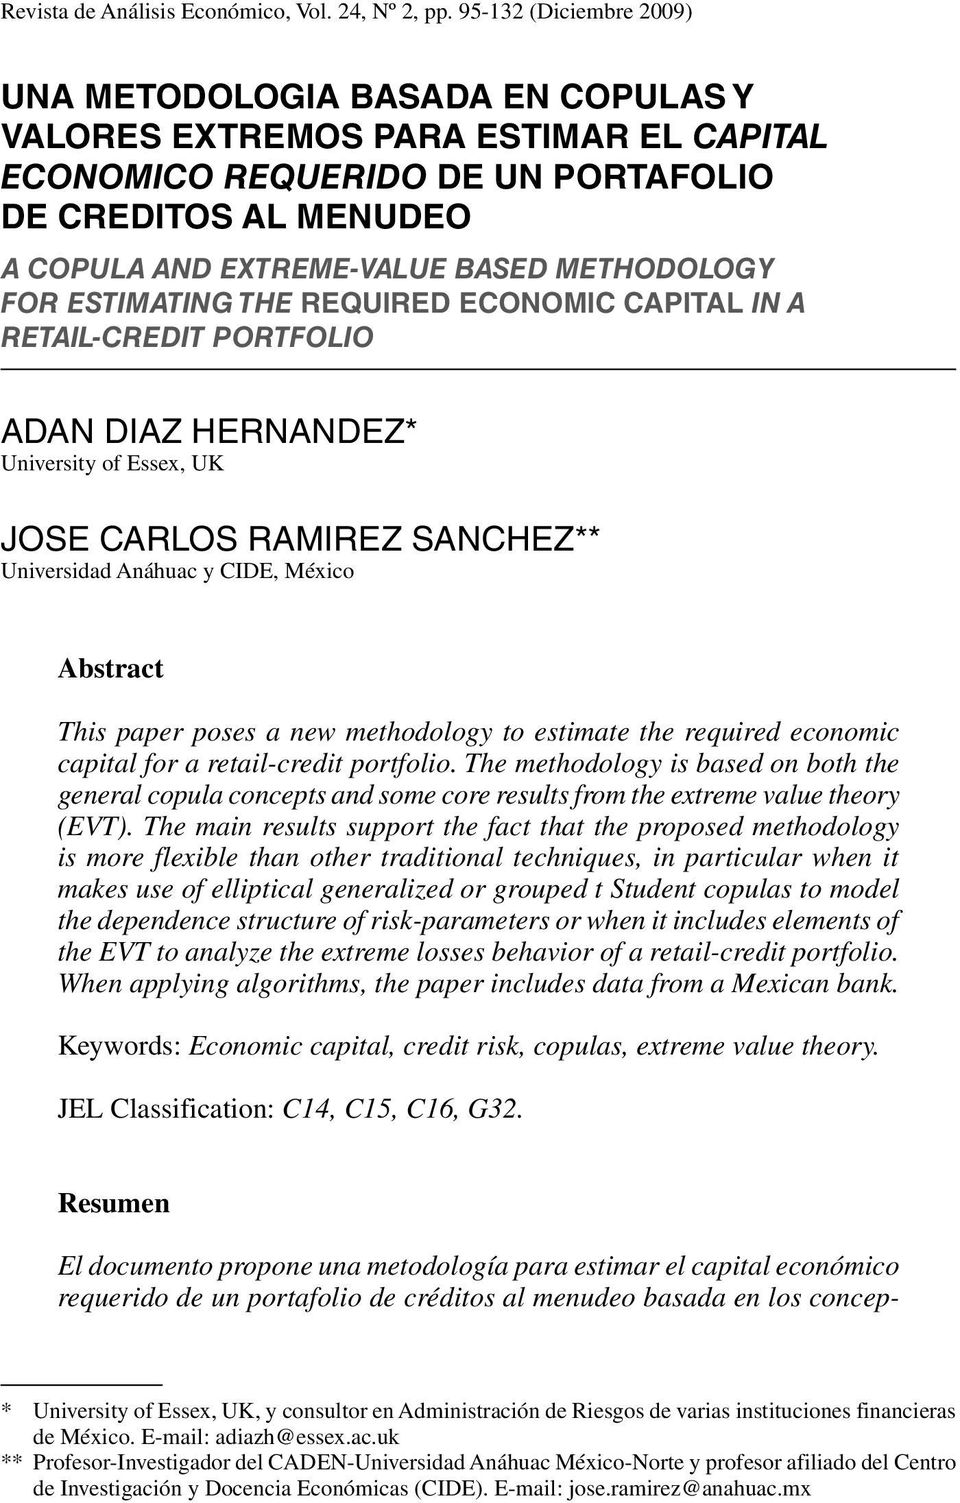 extreme-value based methodology for estimating the required economic capital in a retail-credit portfolio Adan Diaz Hernandez* University of Essex, UK Jose Carlos Ramirez Sanchez** Universidad